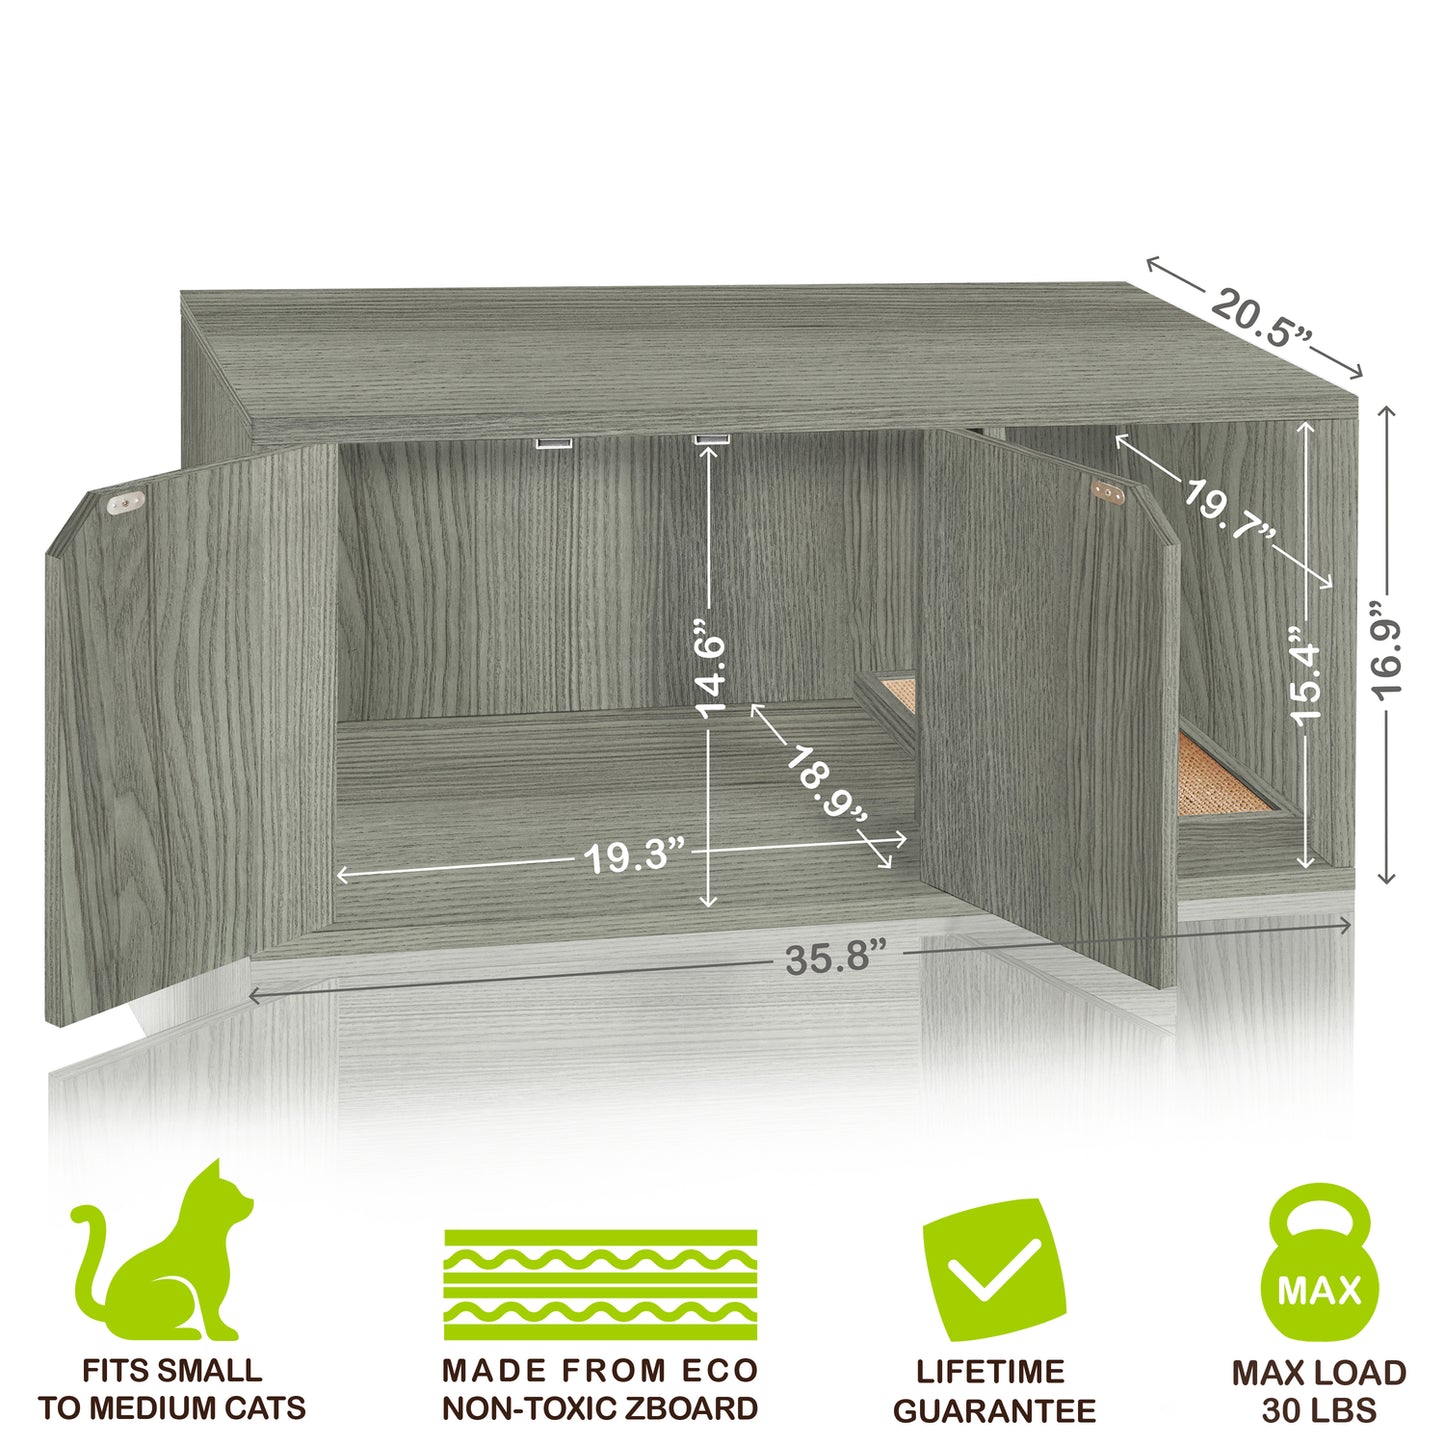 Way Basics Eco Cat Litter Box Enclosure Modern Cat Furniture, Grey